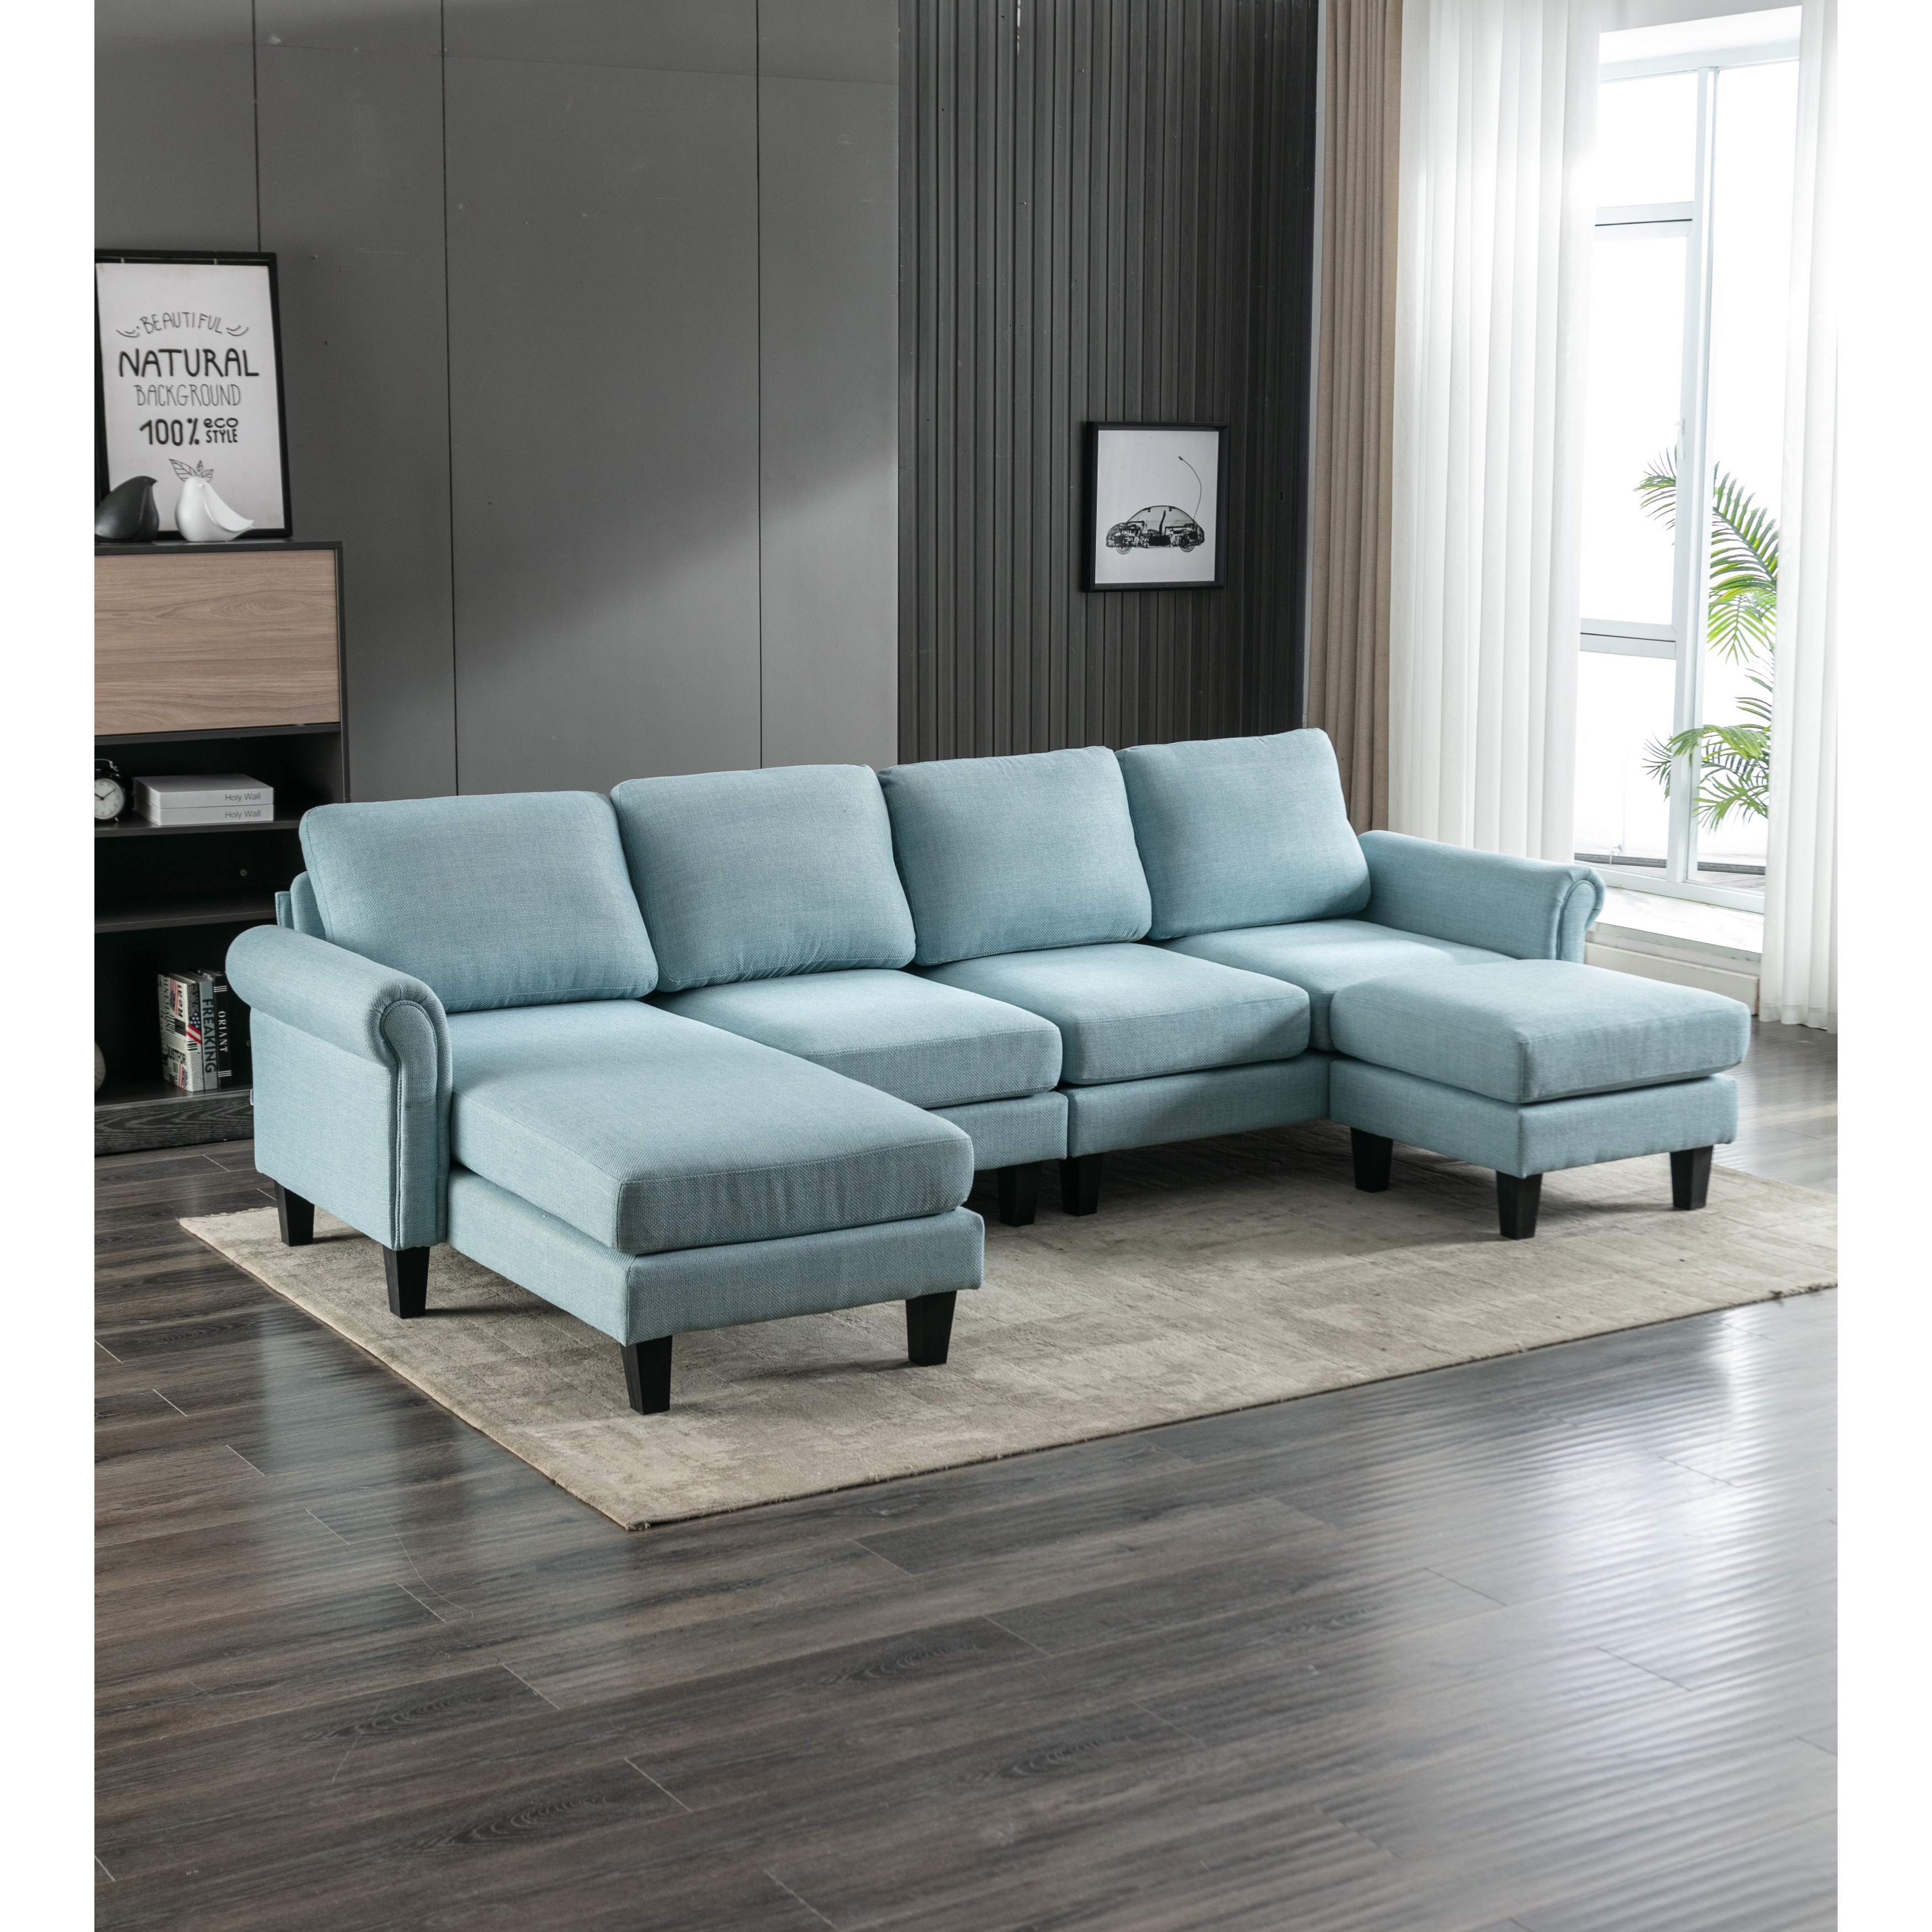 108.66 Modern Linen Upholstered U-shape Sectional Sofa With Foam Seat Fill